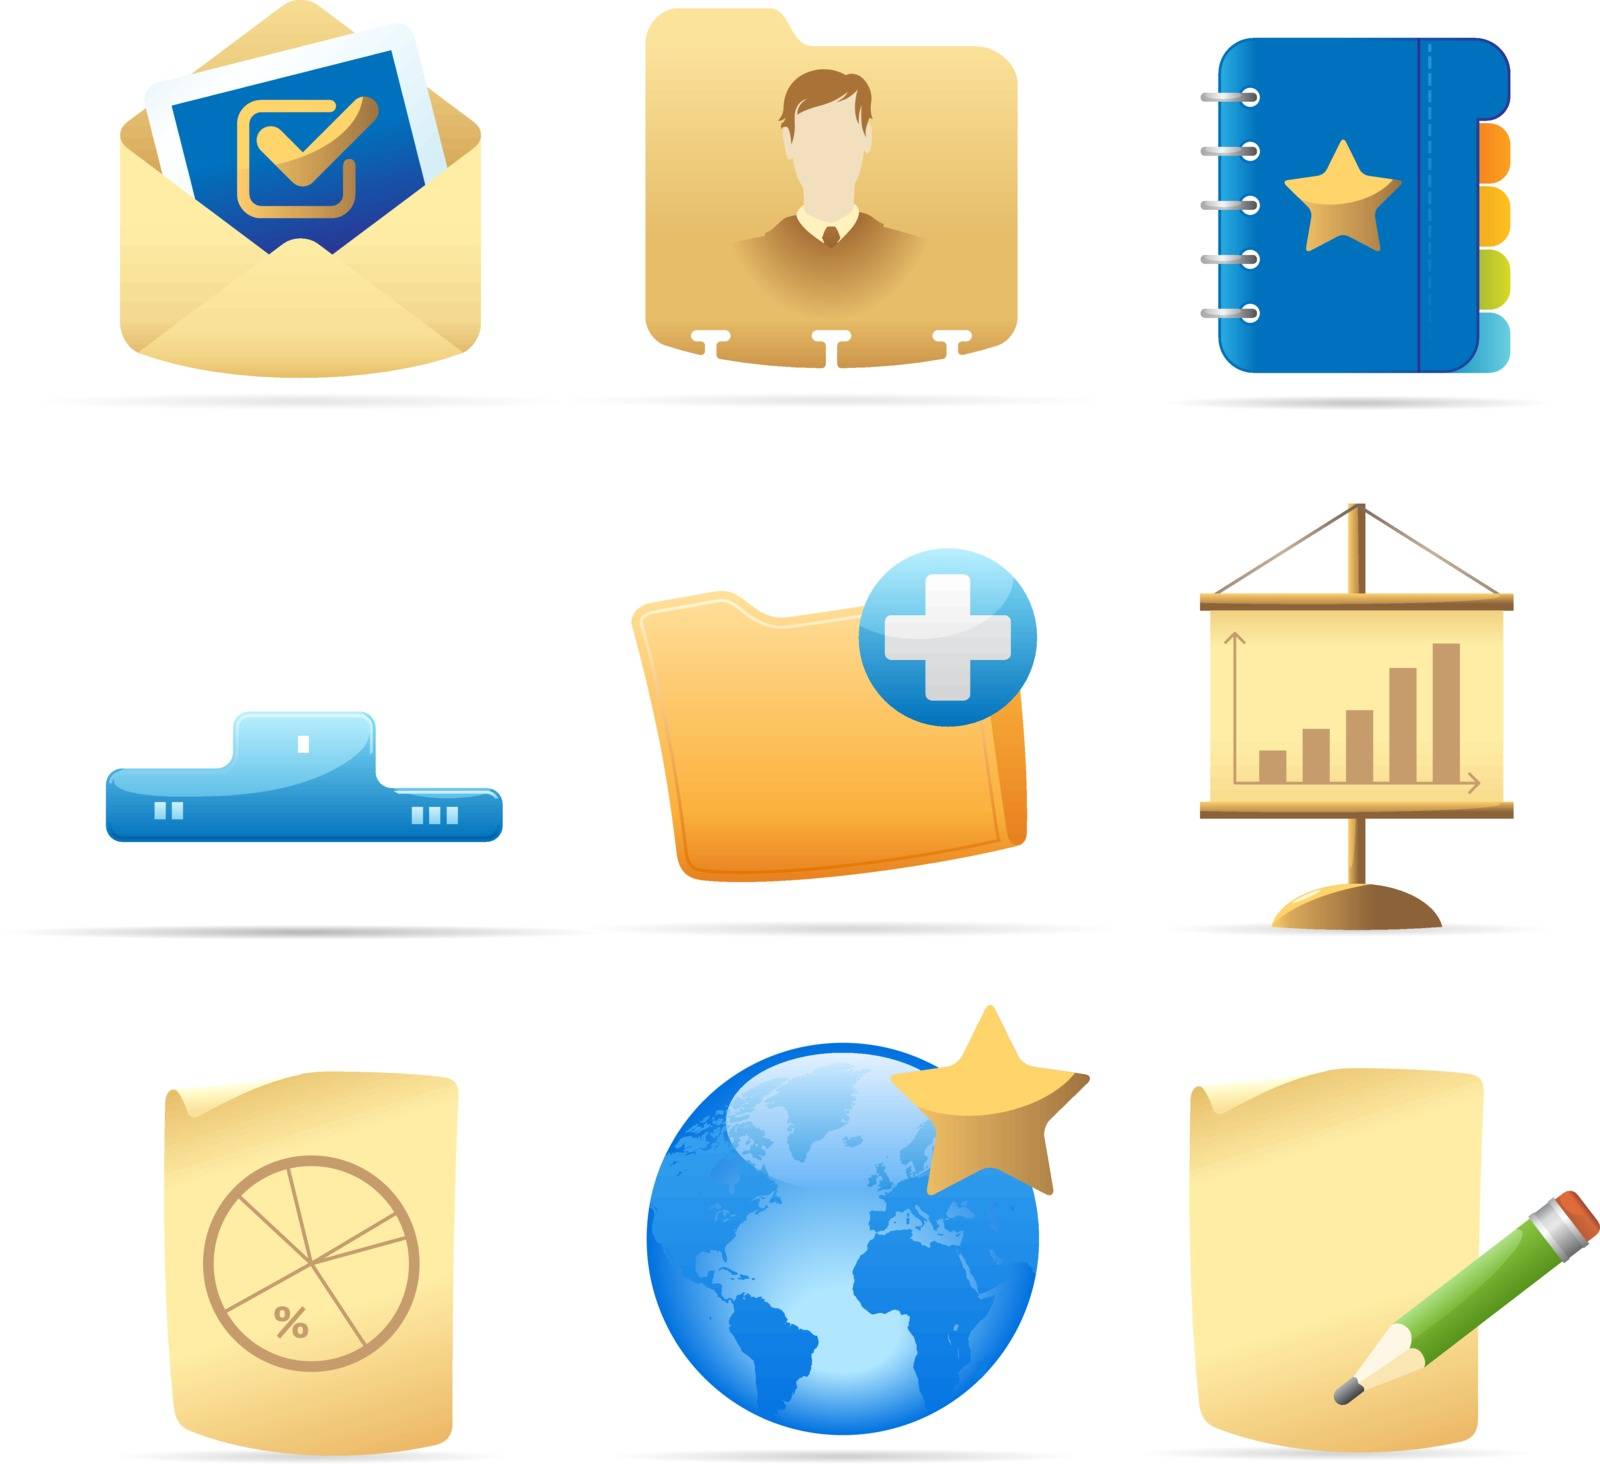 Icons for business metaphor by ildogesto